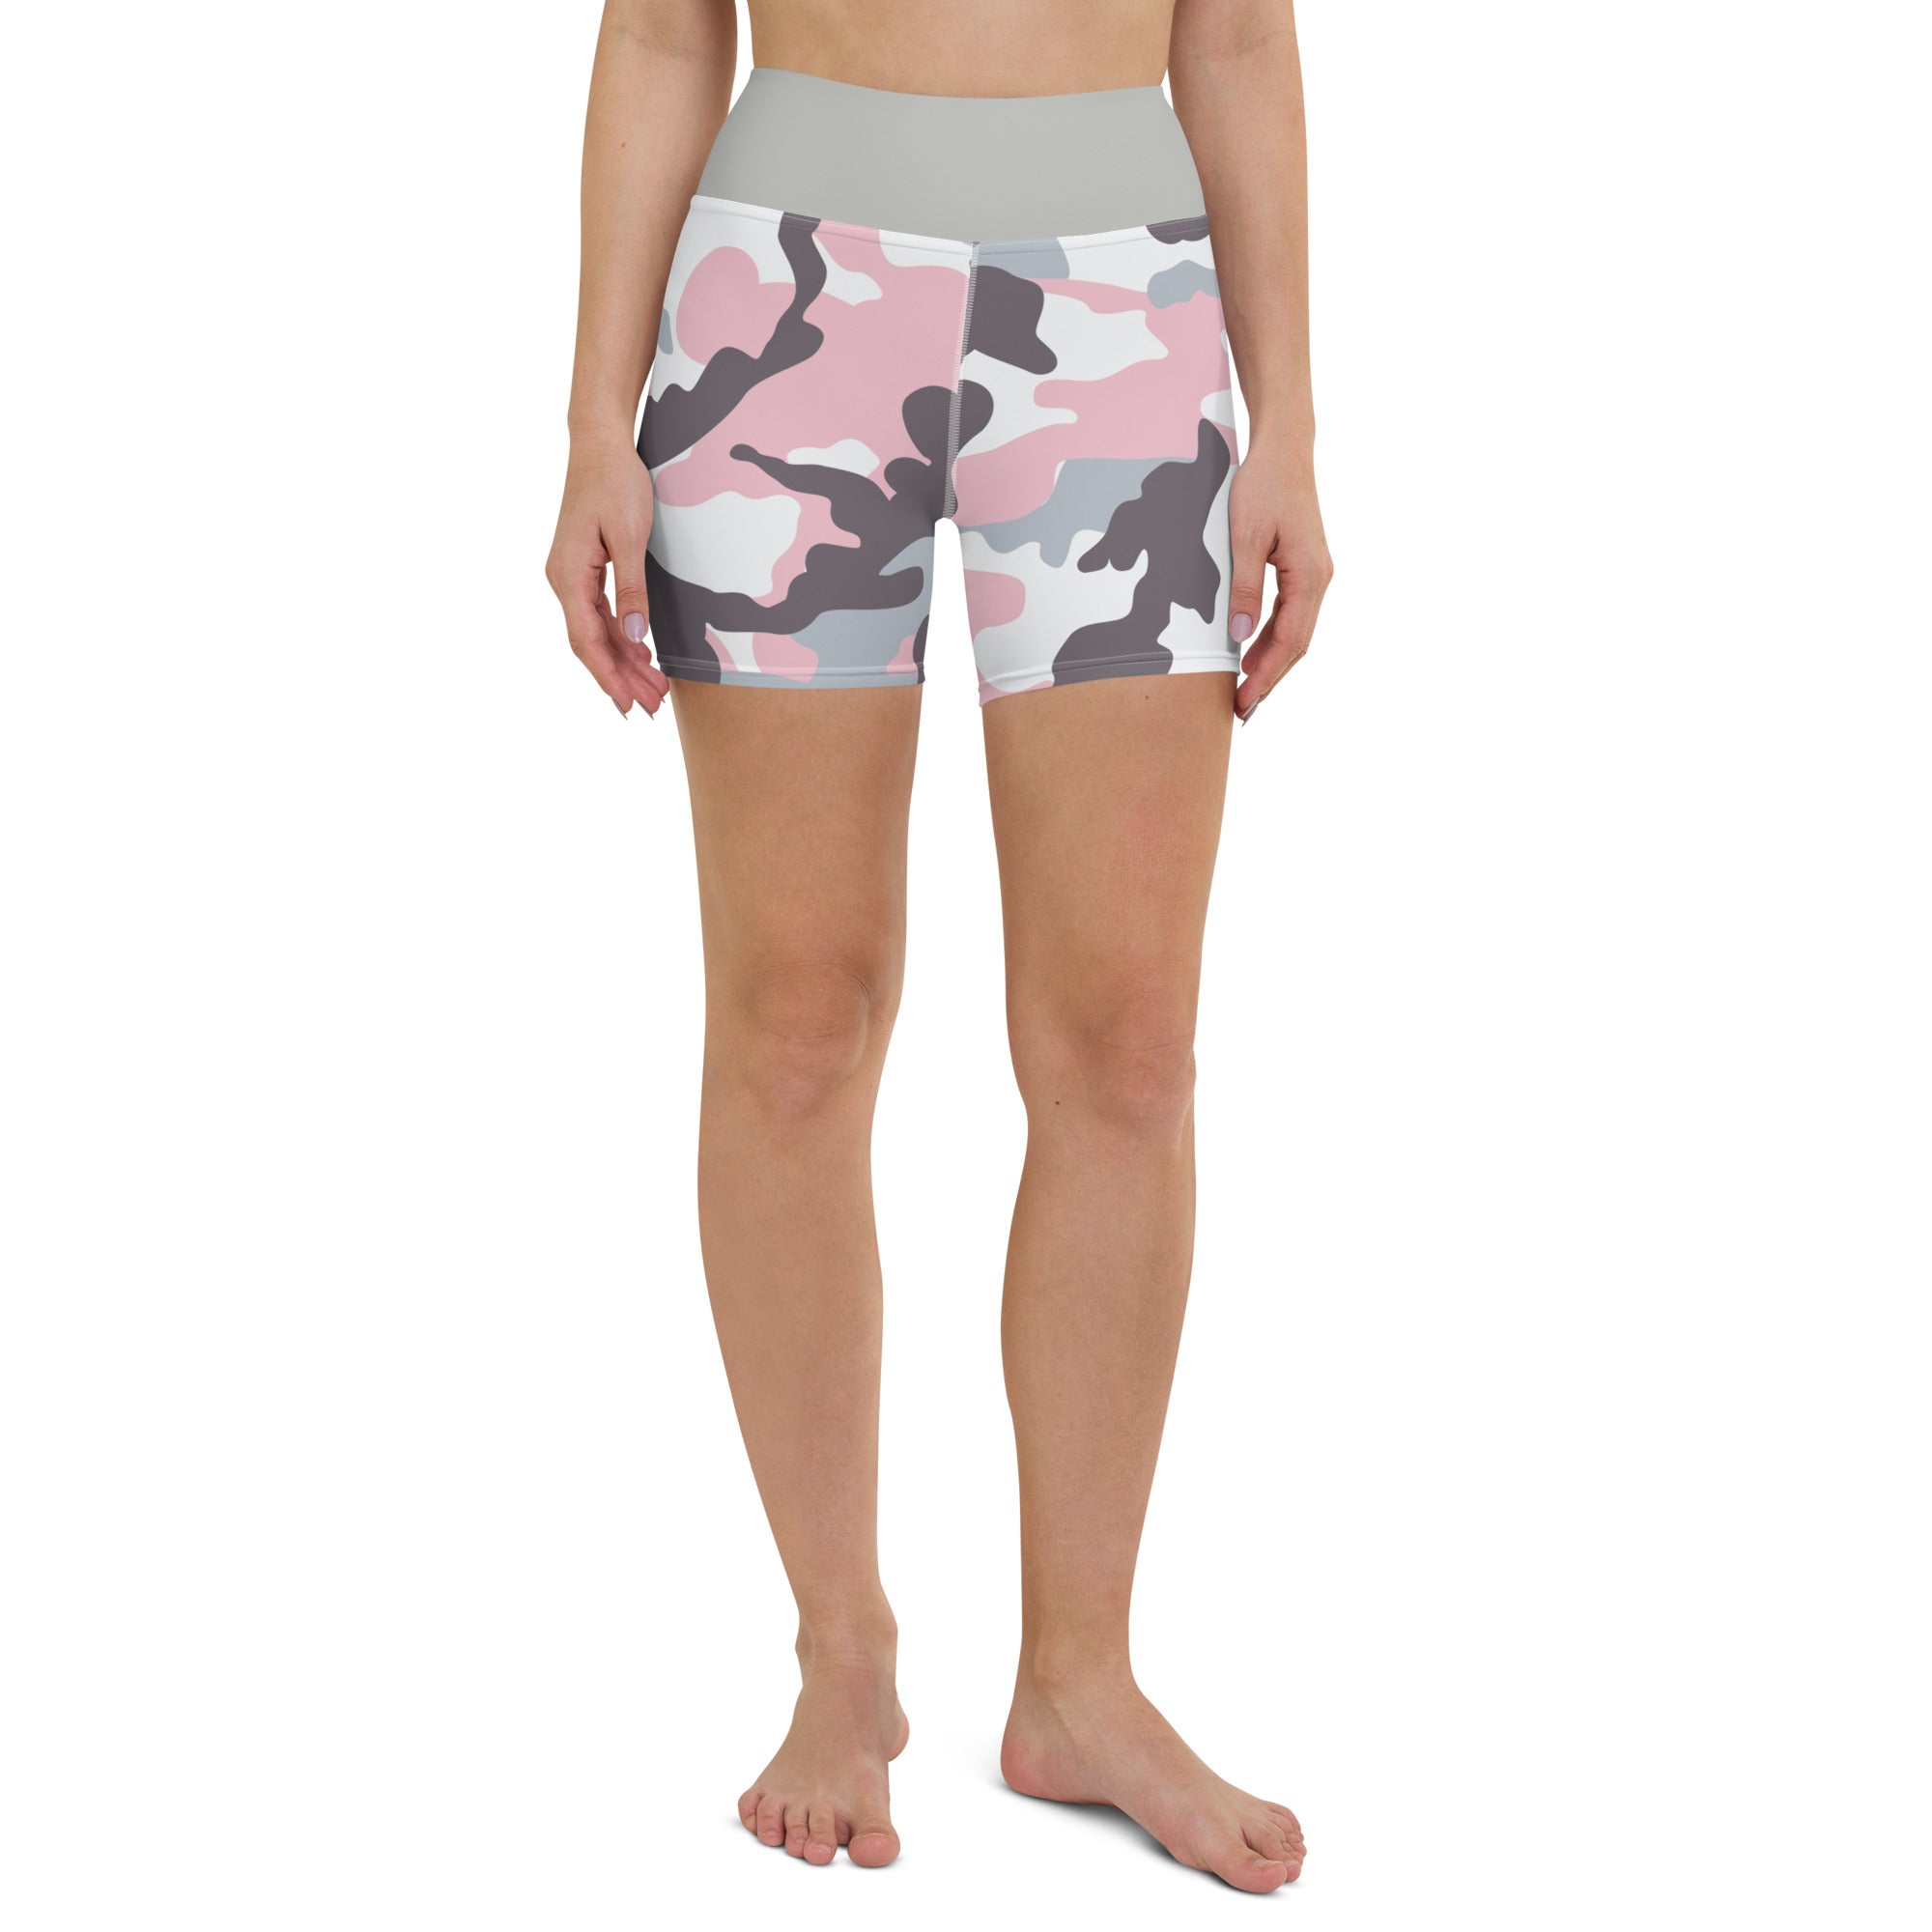 Yoga Shorts- Camo Pink and Grey